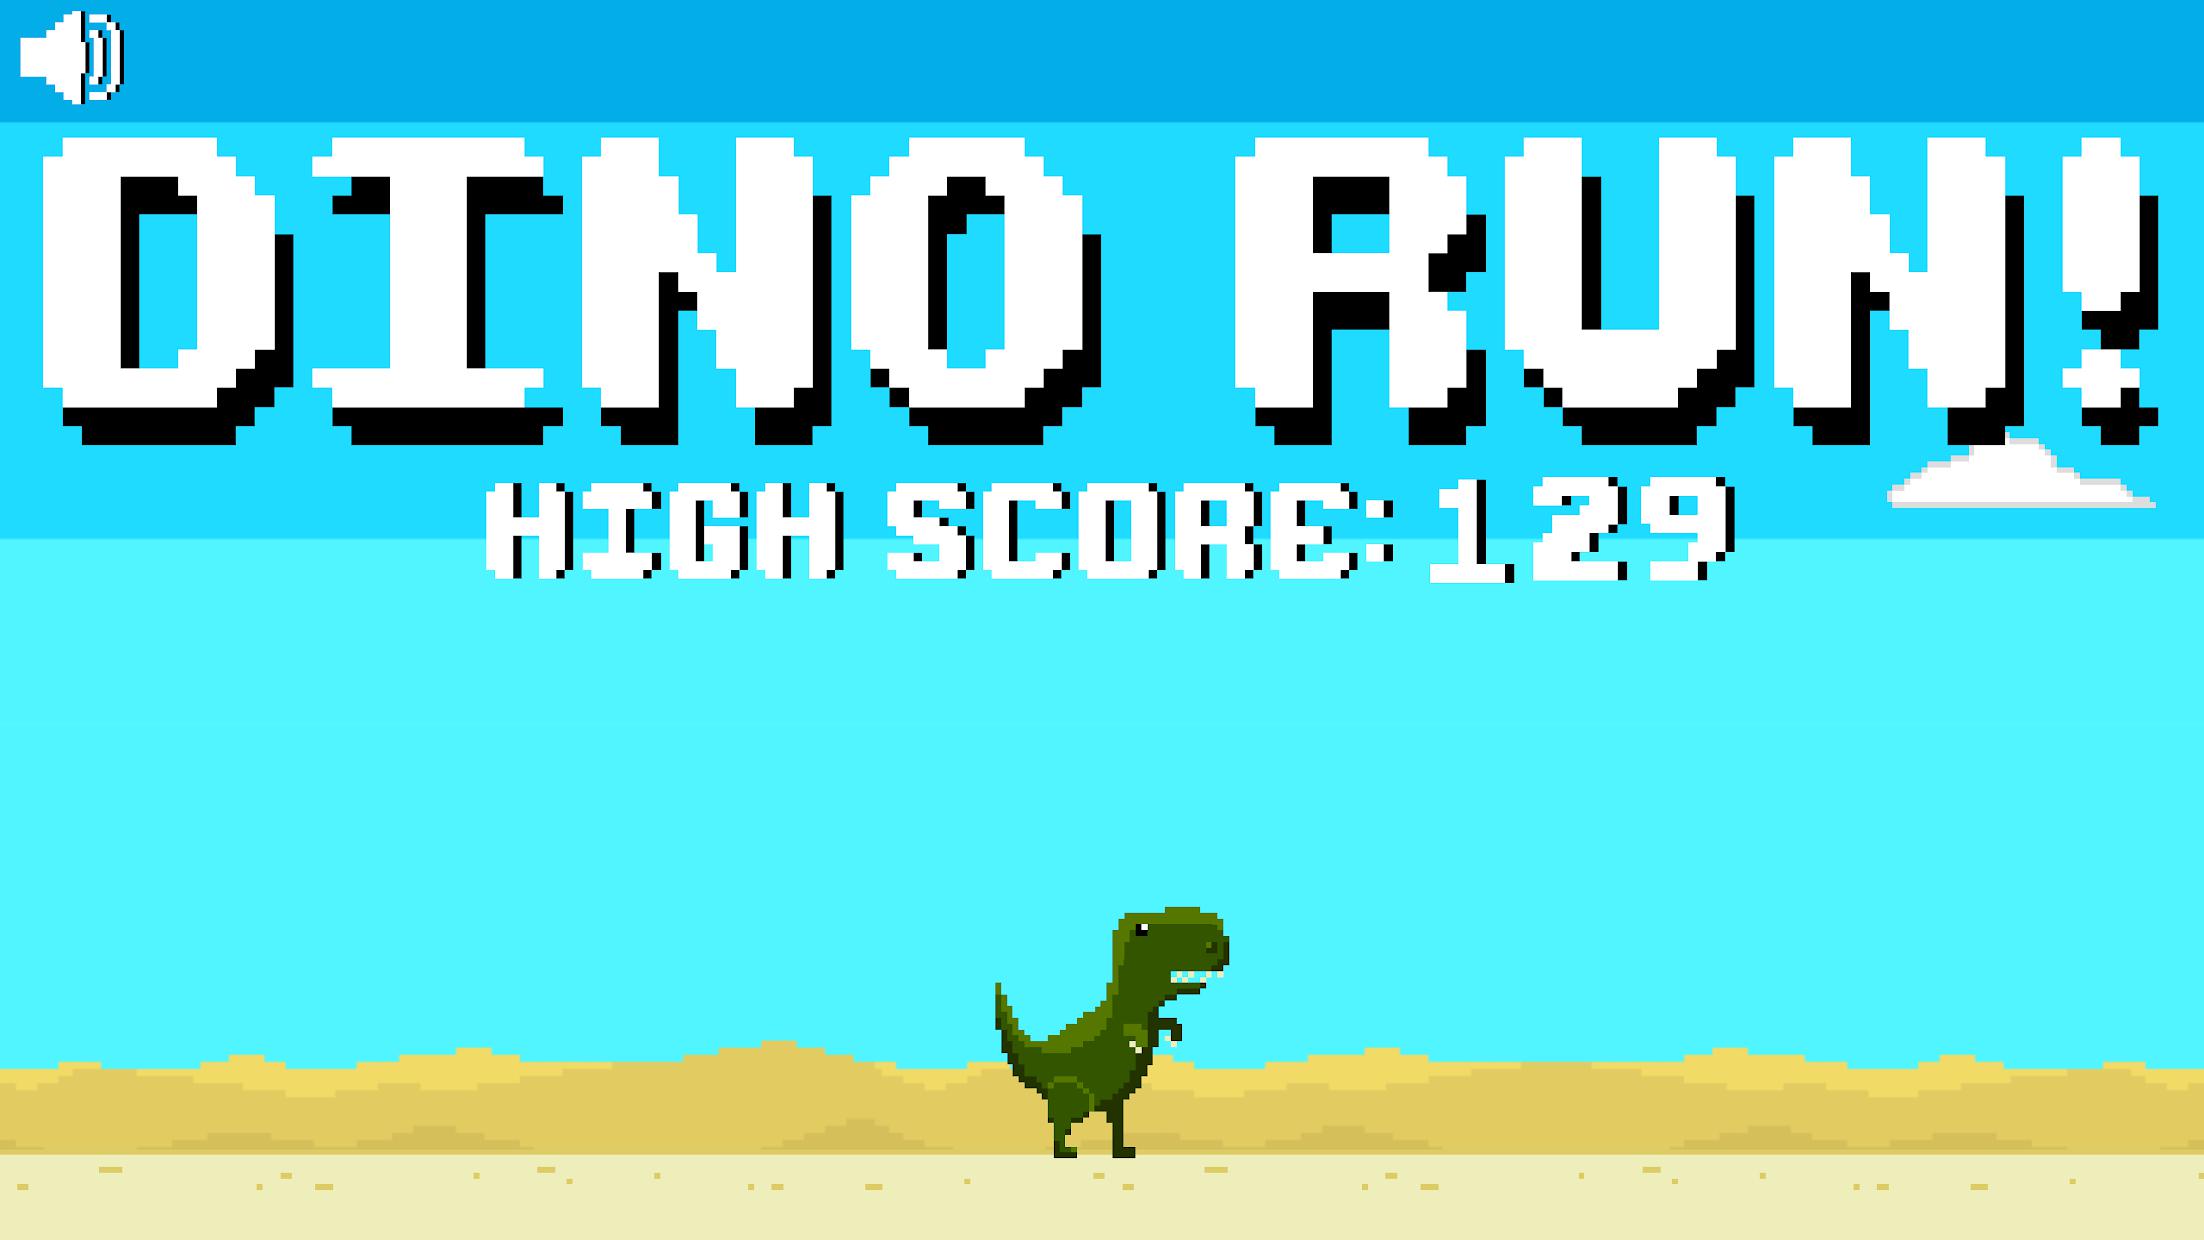 Dino Run!